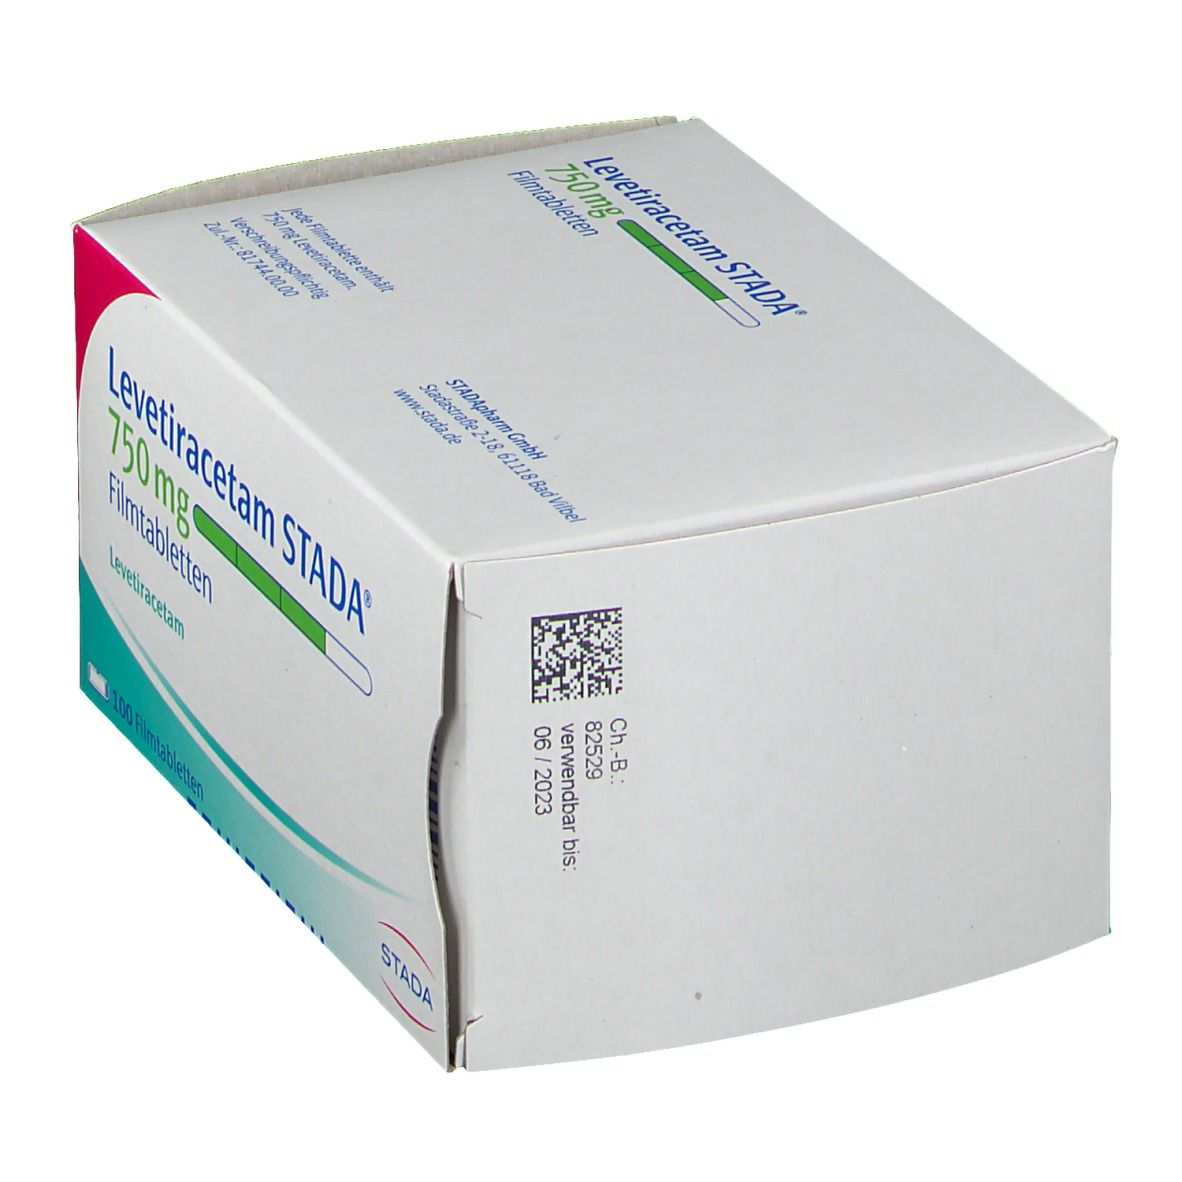 Levetiracetam STADA® 750 mg